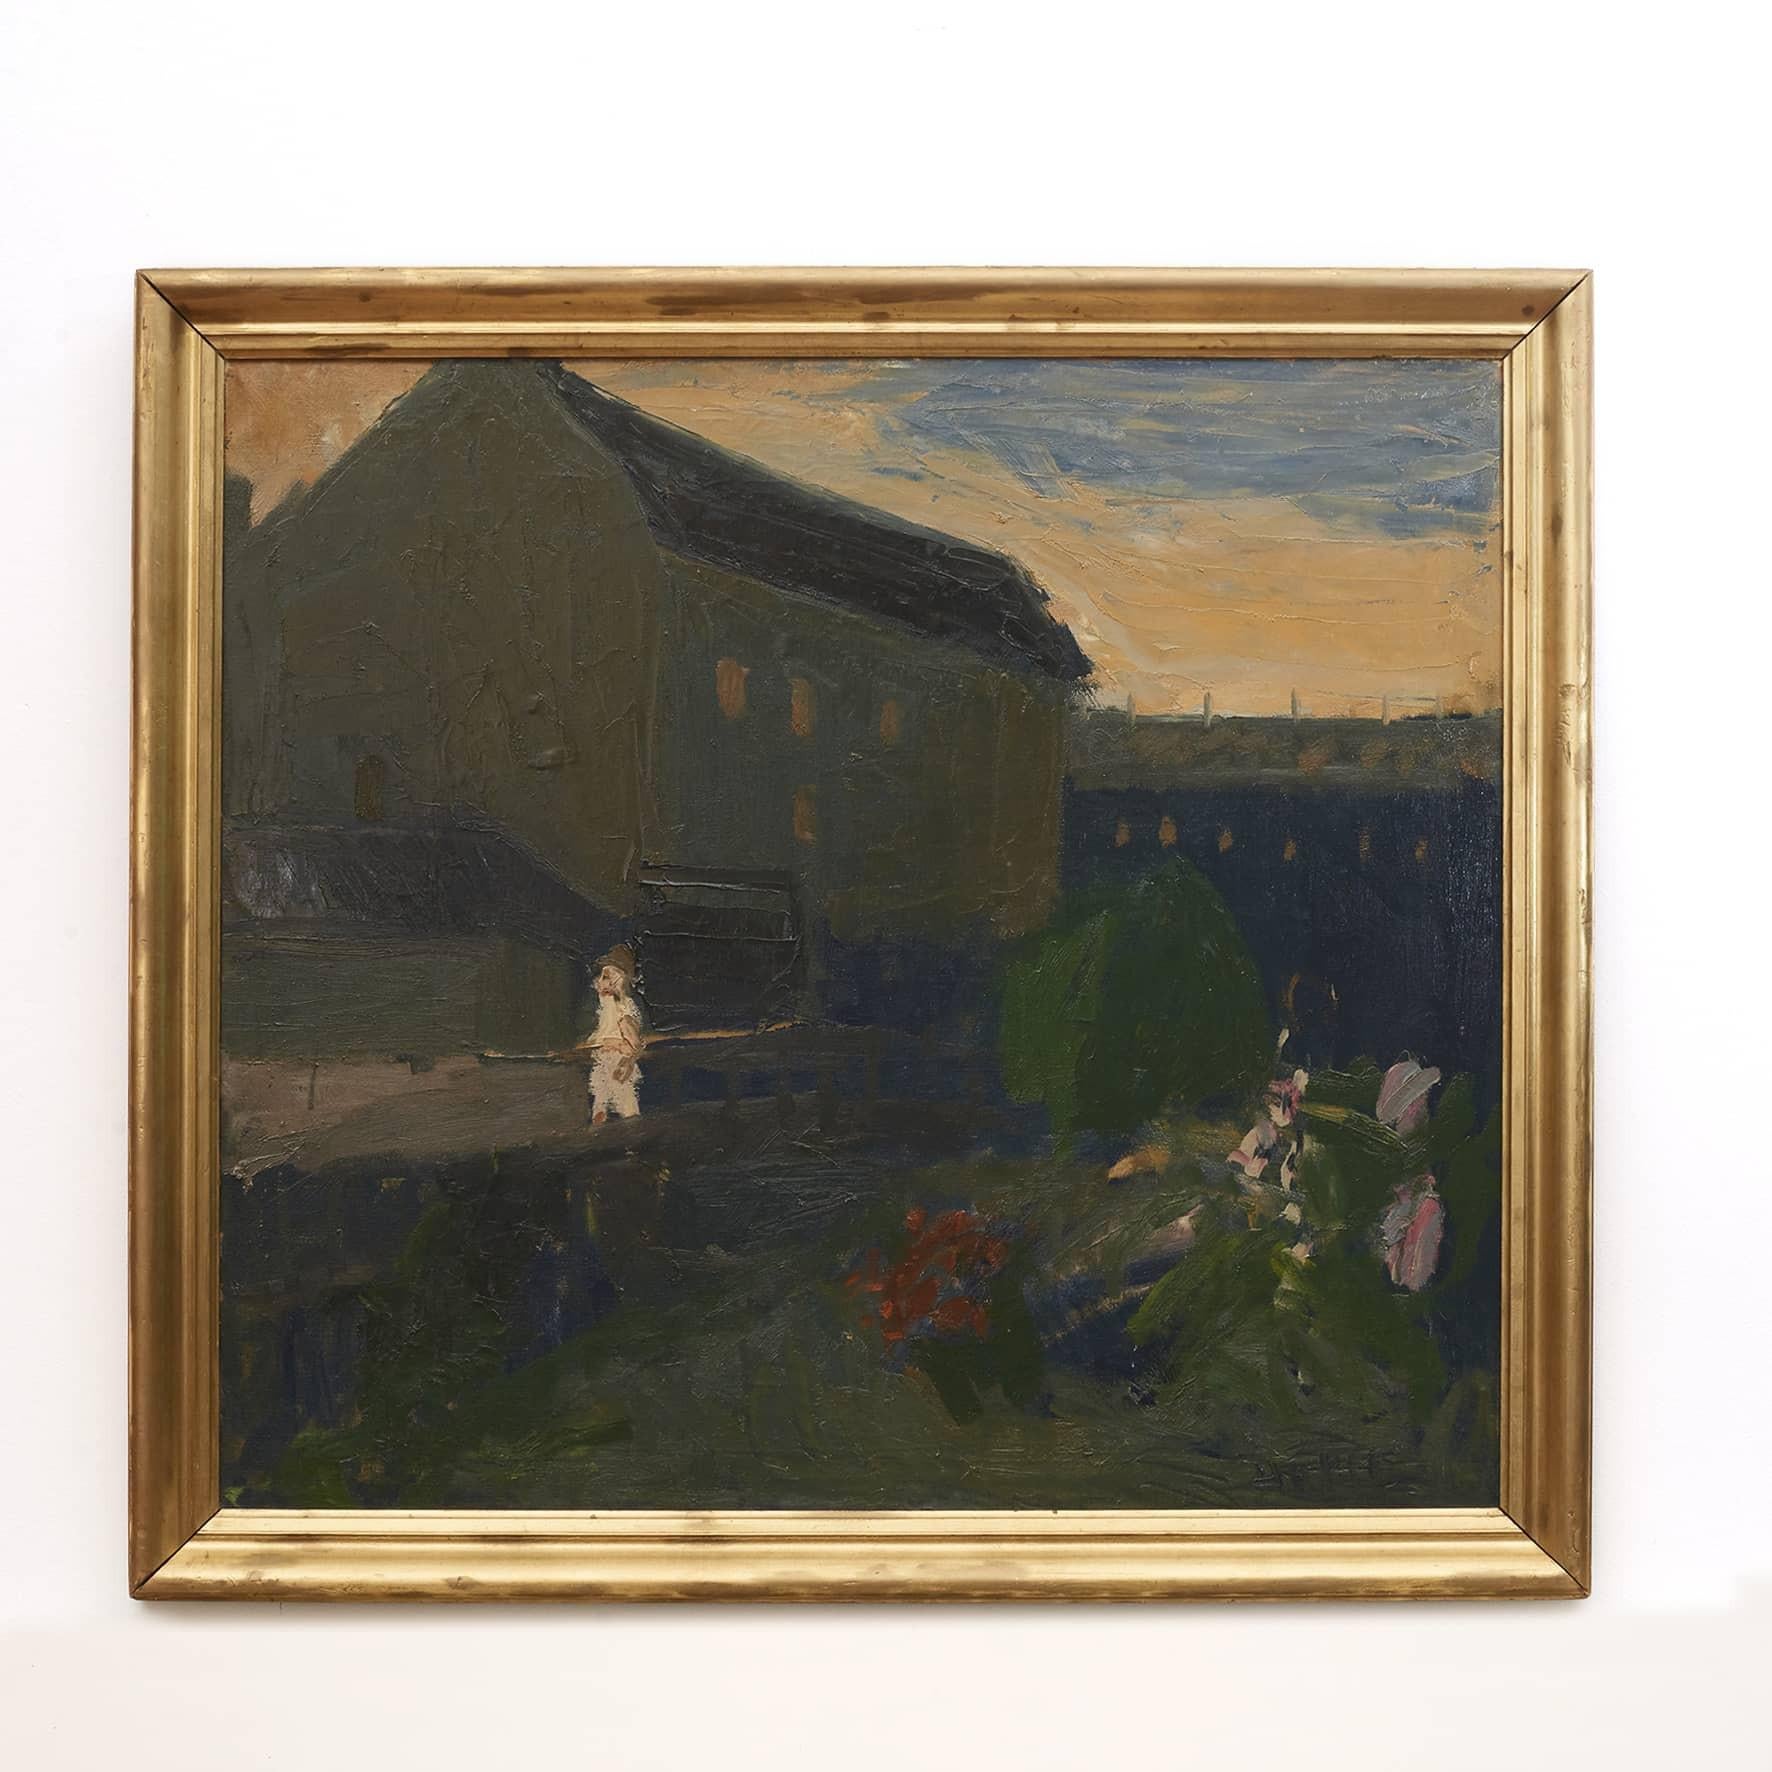 Erik Hoppe (Danish painter) 1896-1968.
Painting depicting 